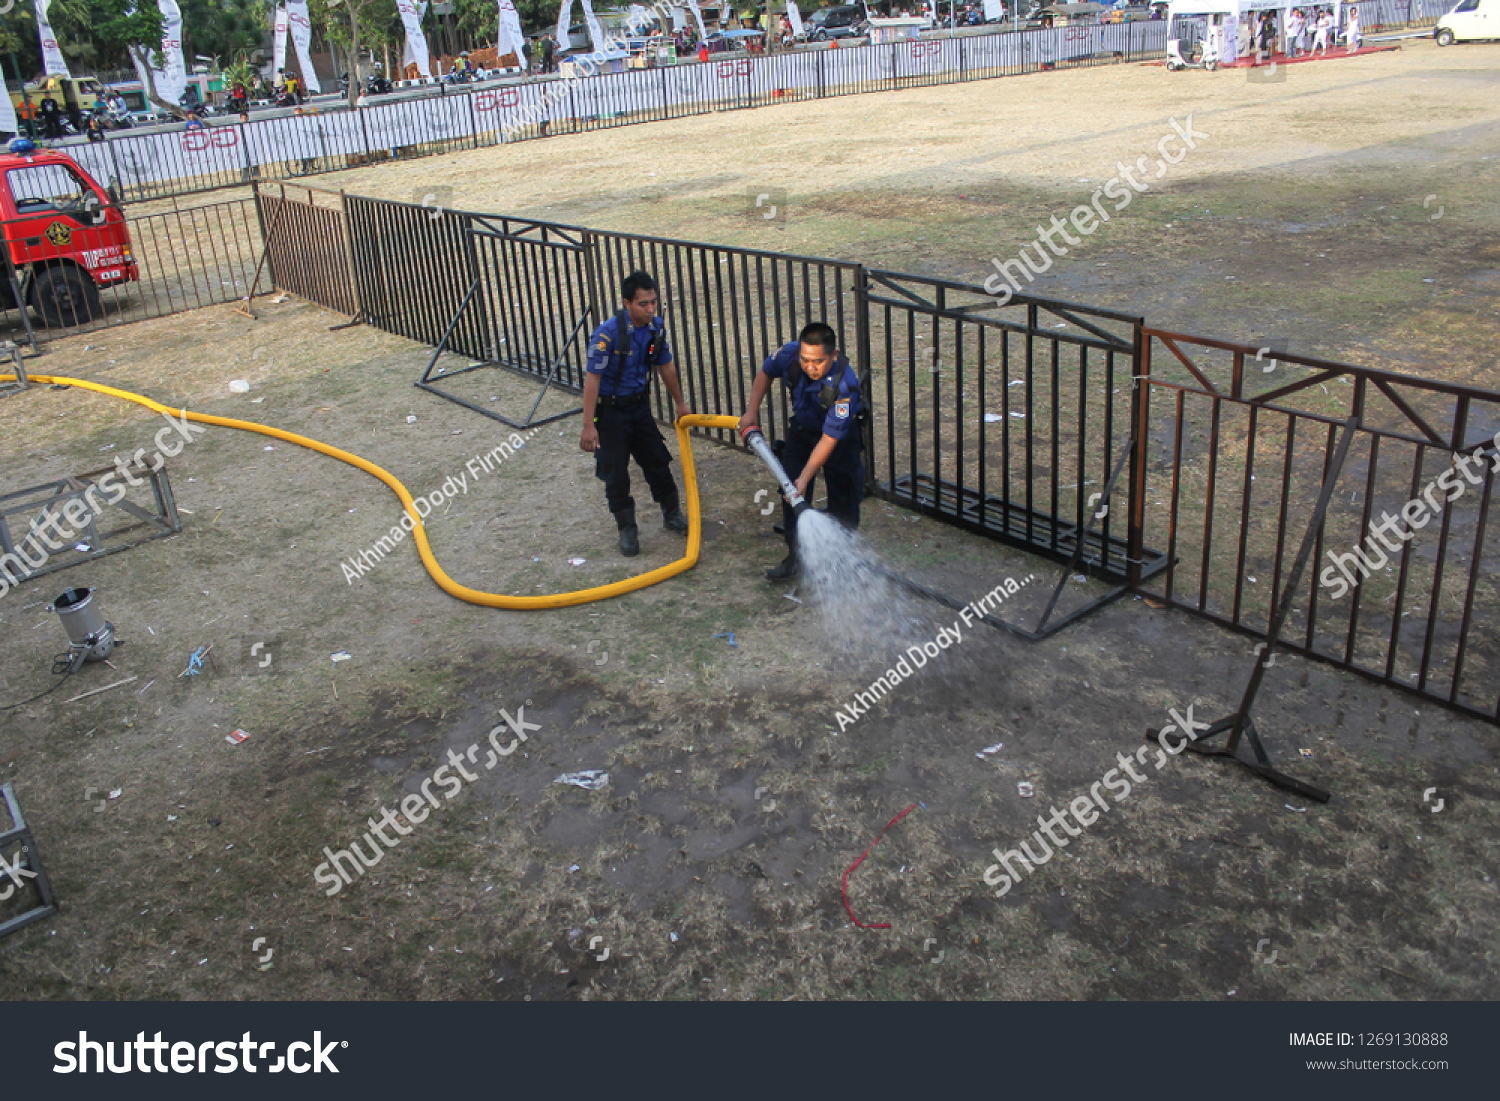 Linggau, Indonesia - 28th 08 2013: Fireman Spraying Water #1269130888